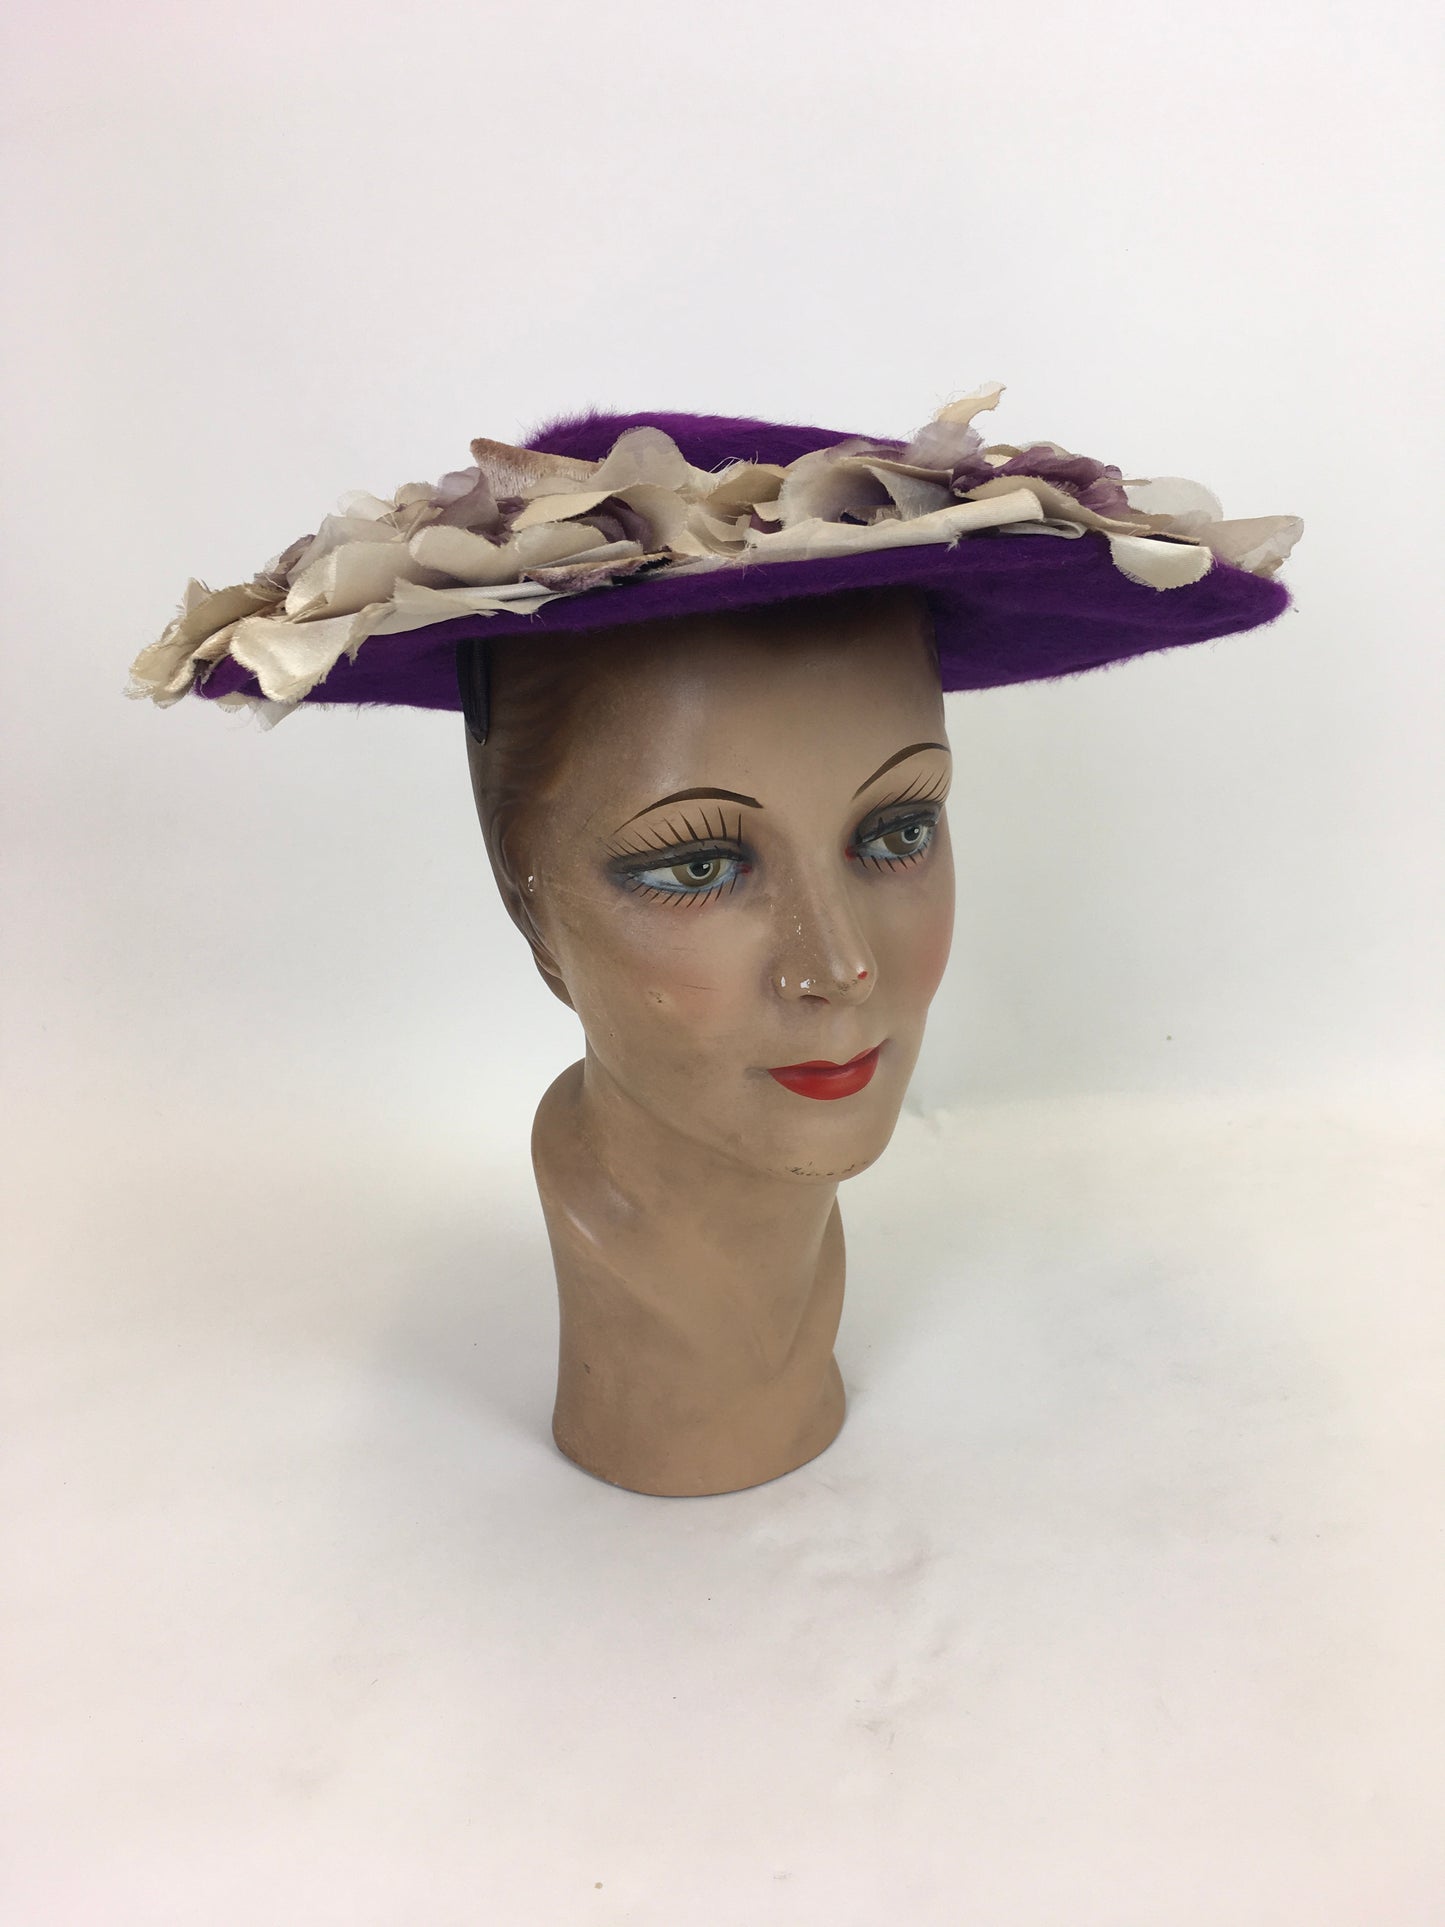 Original 1940’s/ 1950’s Merrimac Platter Hat - In Cadbury Purple with Floral Millinery